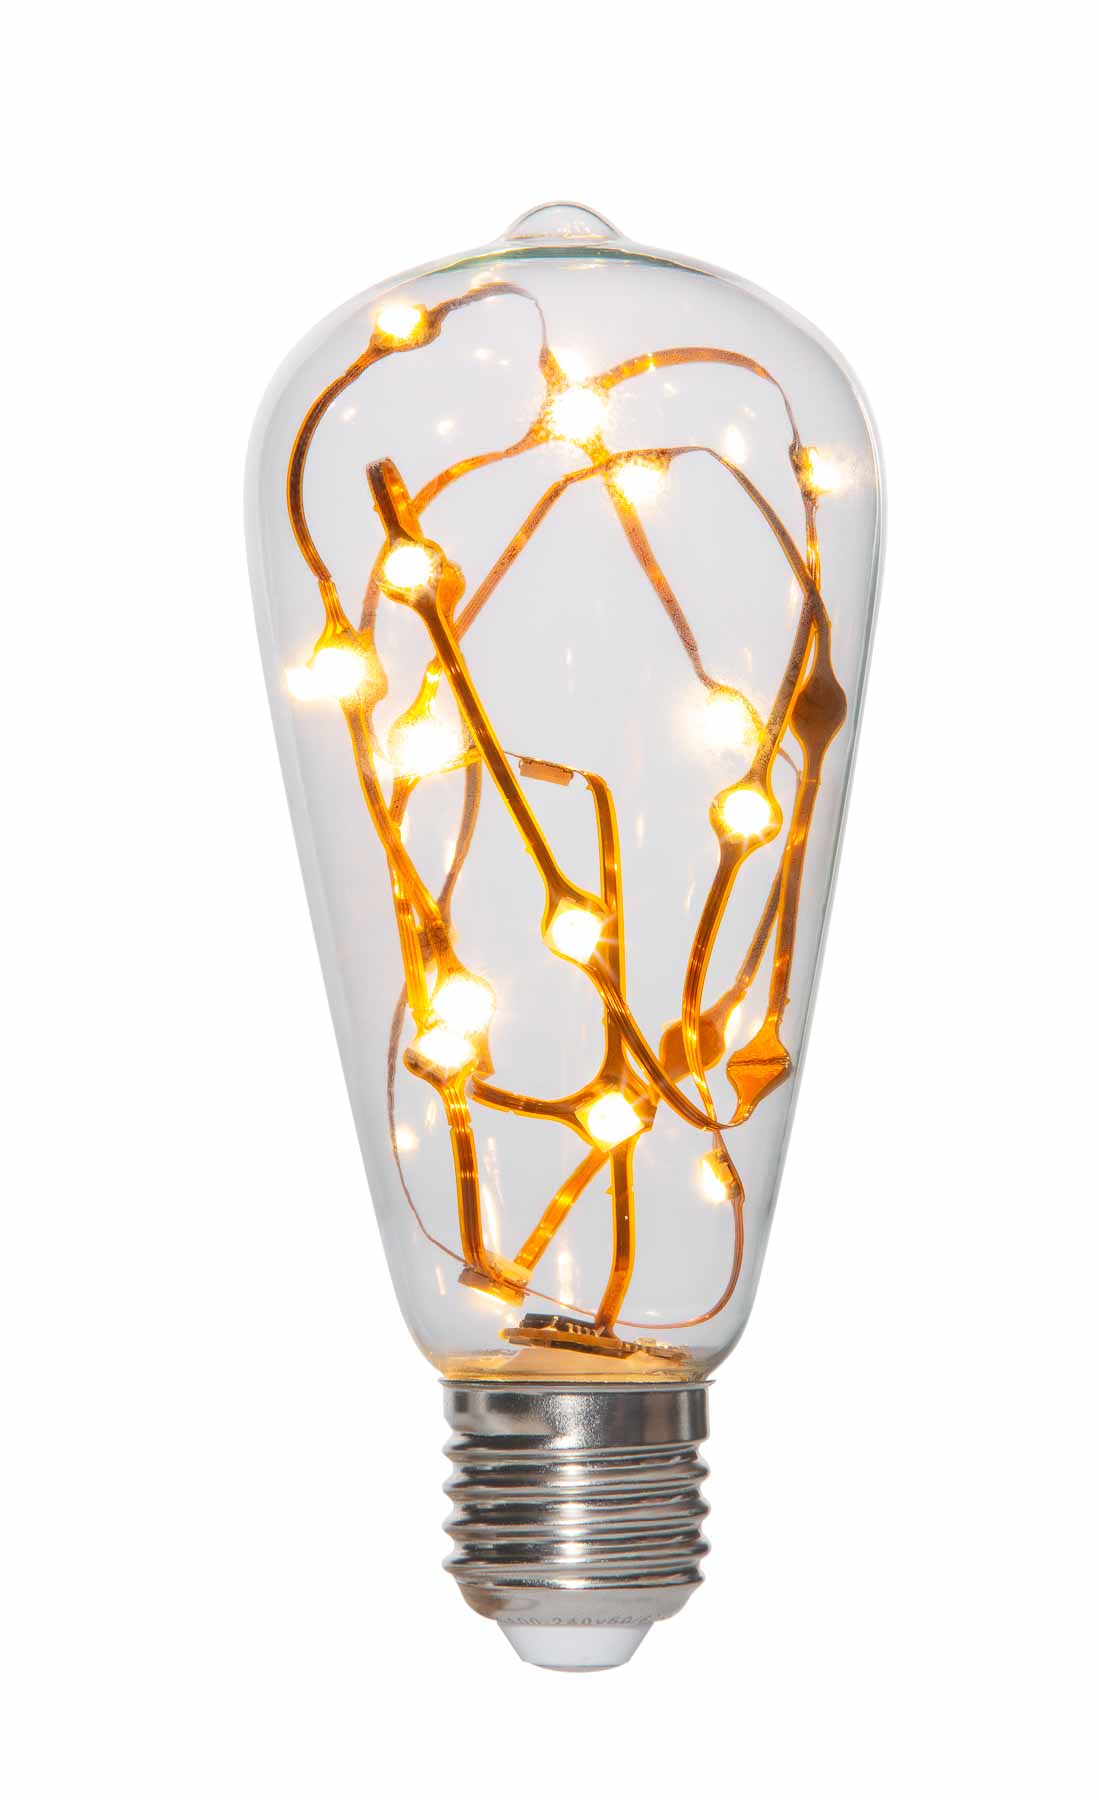 Phosme Bulb Small White_Copyright Zoom Studio – Smart LED bulb photographed to Website Amazon and Ebay